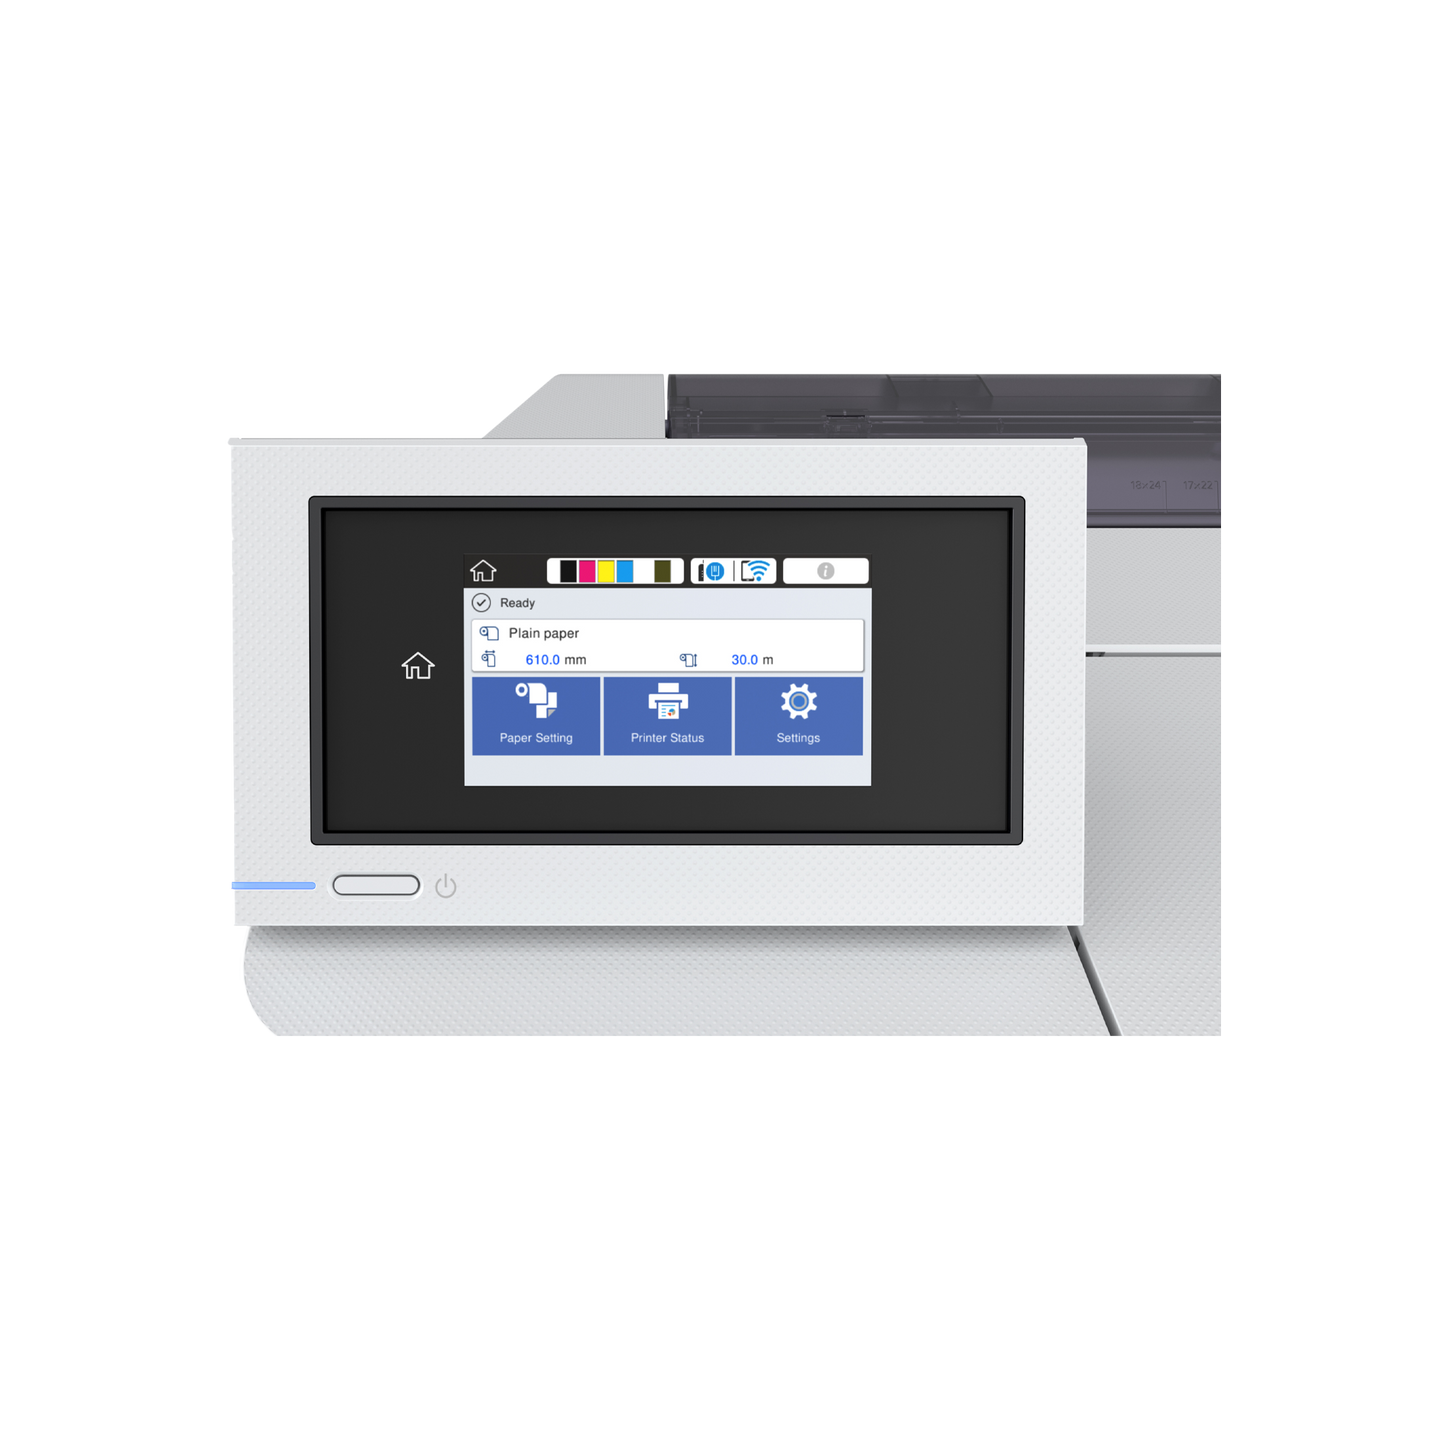 SureColor T3170 Wireless Printer